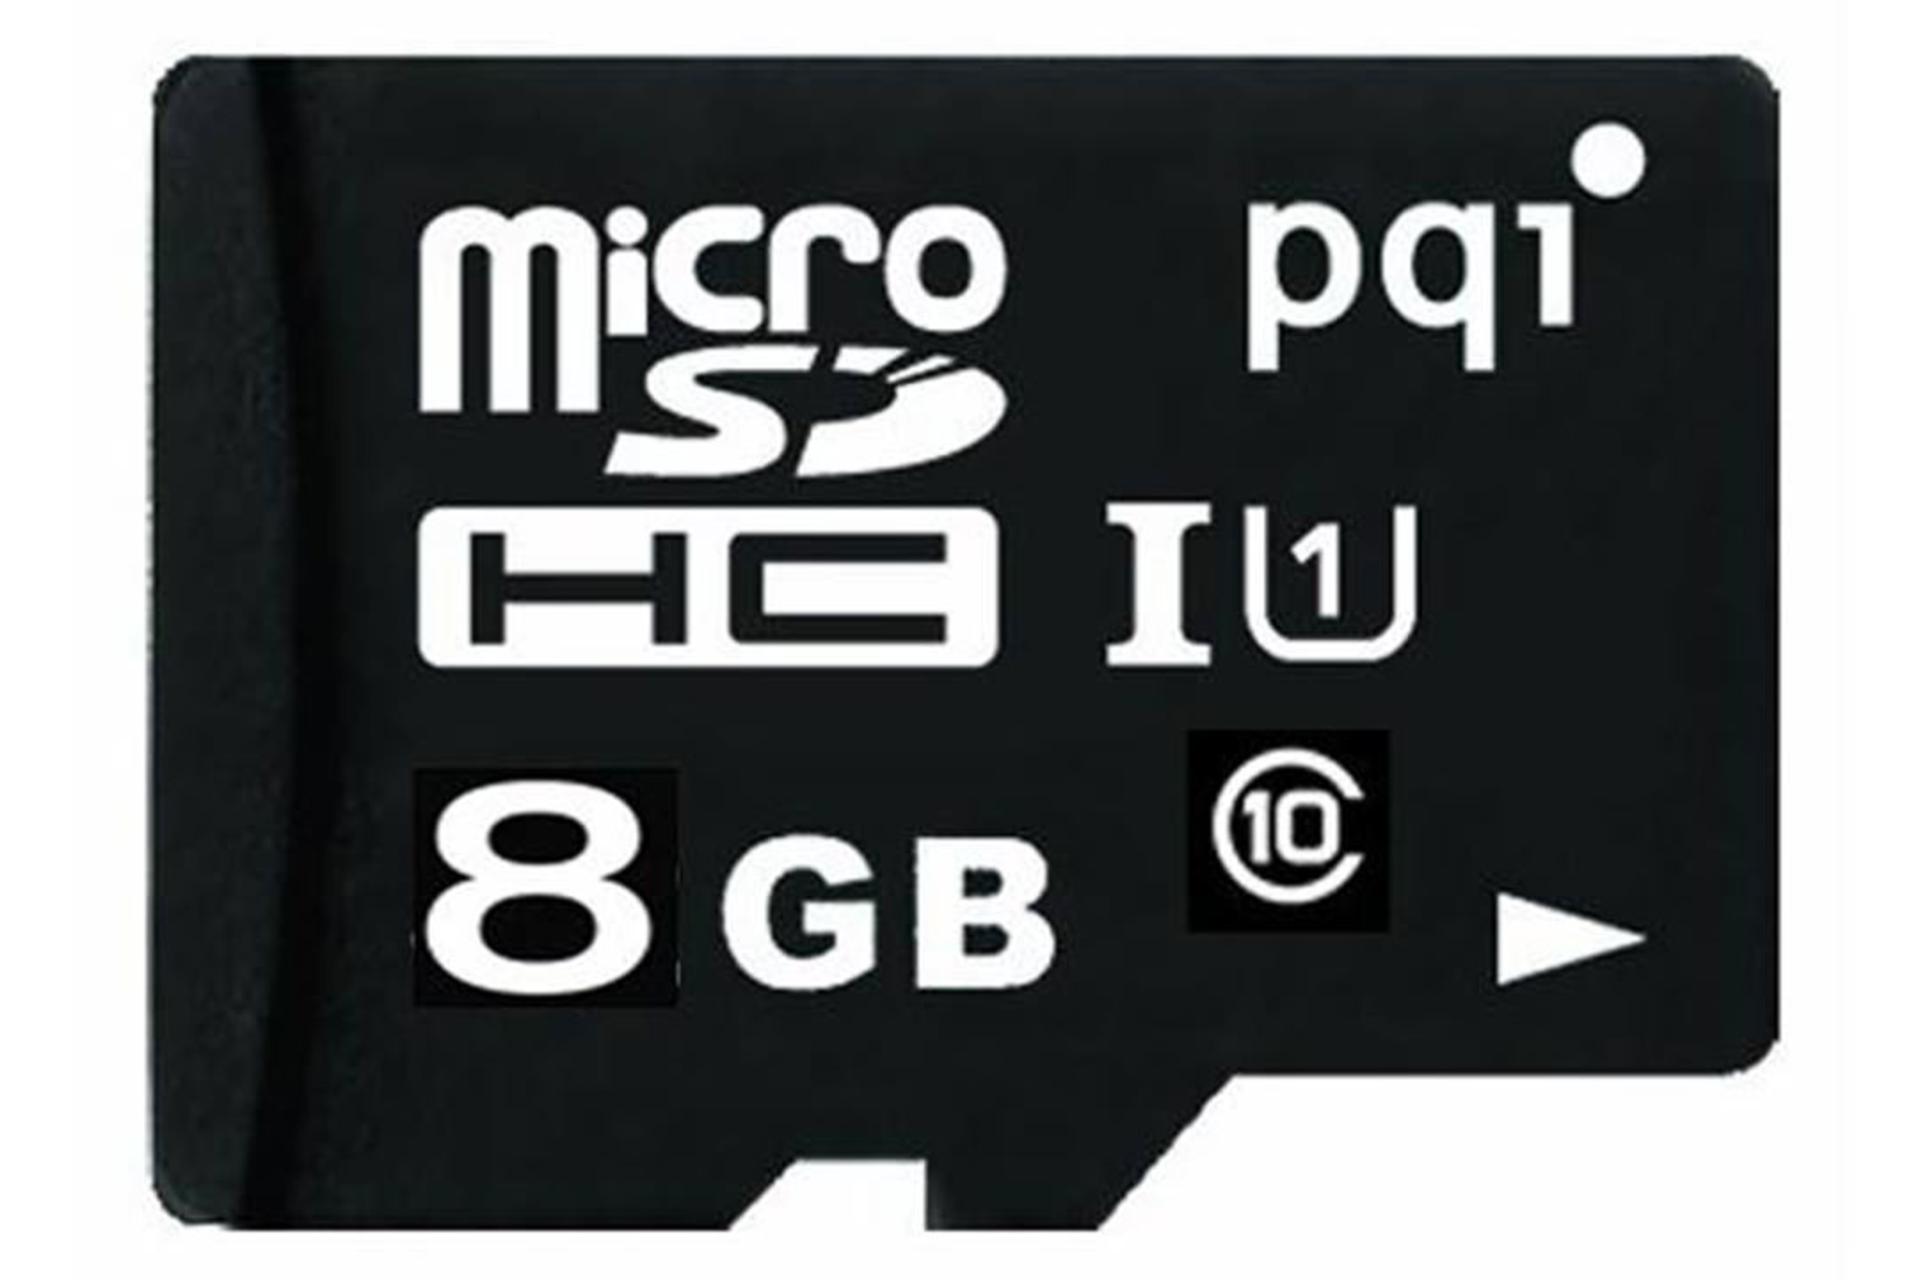 PQI microSDHC Class 10 UHS-I U1 8GB